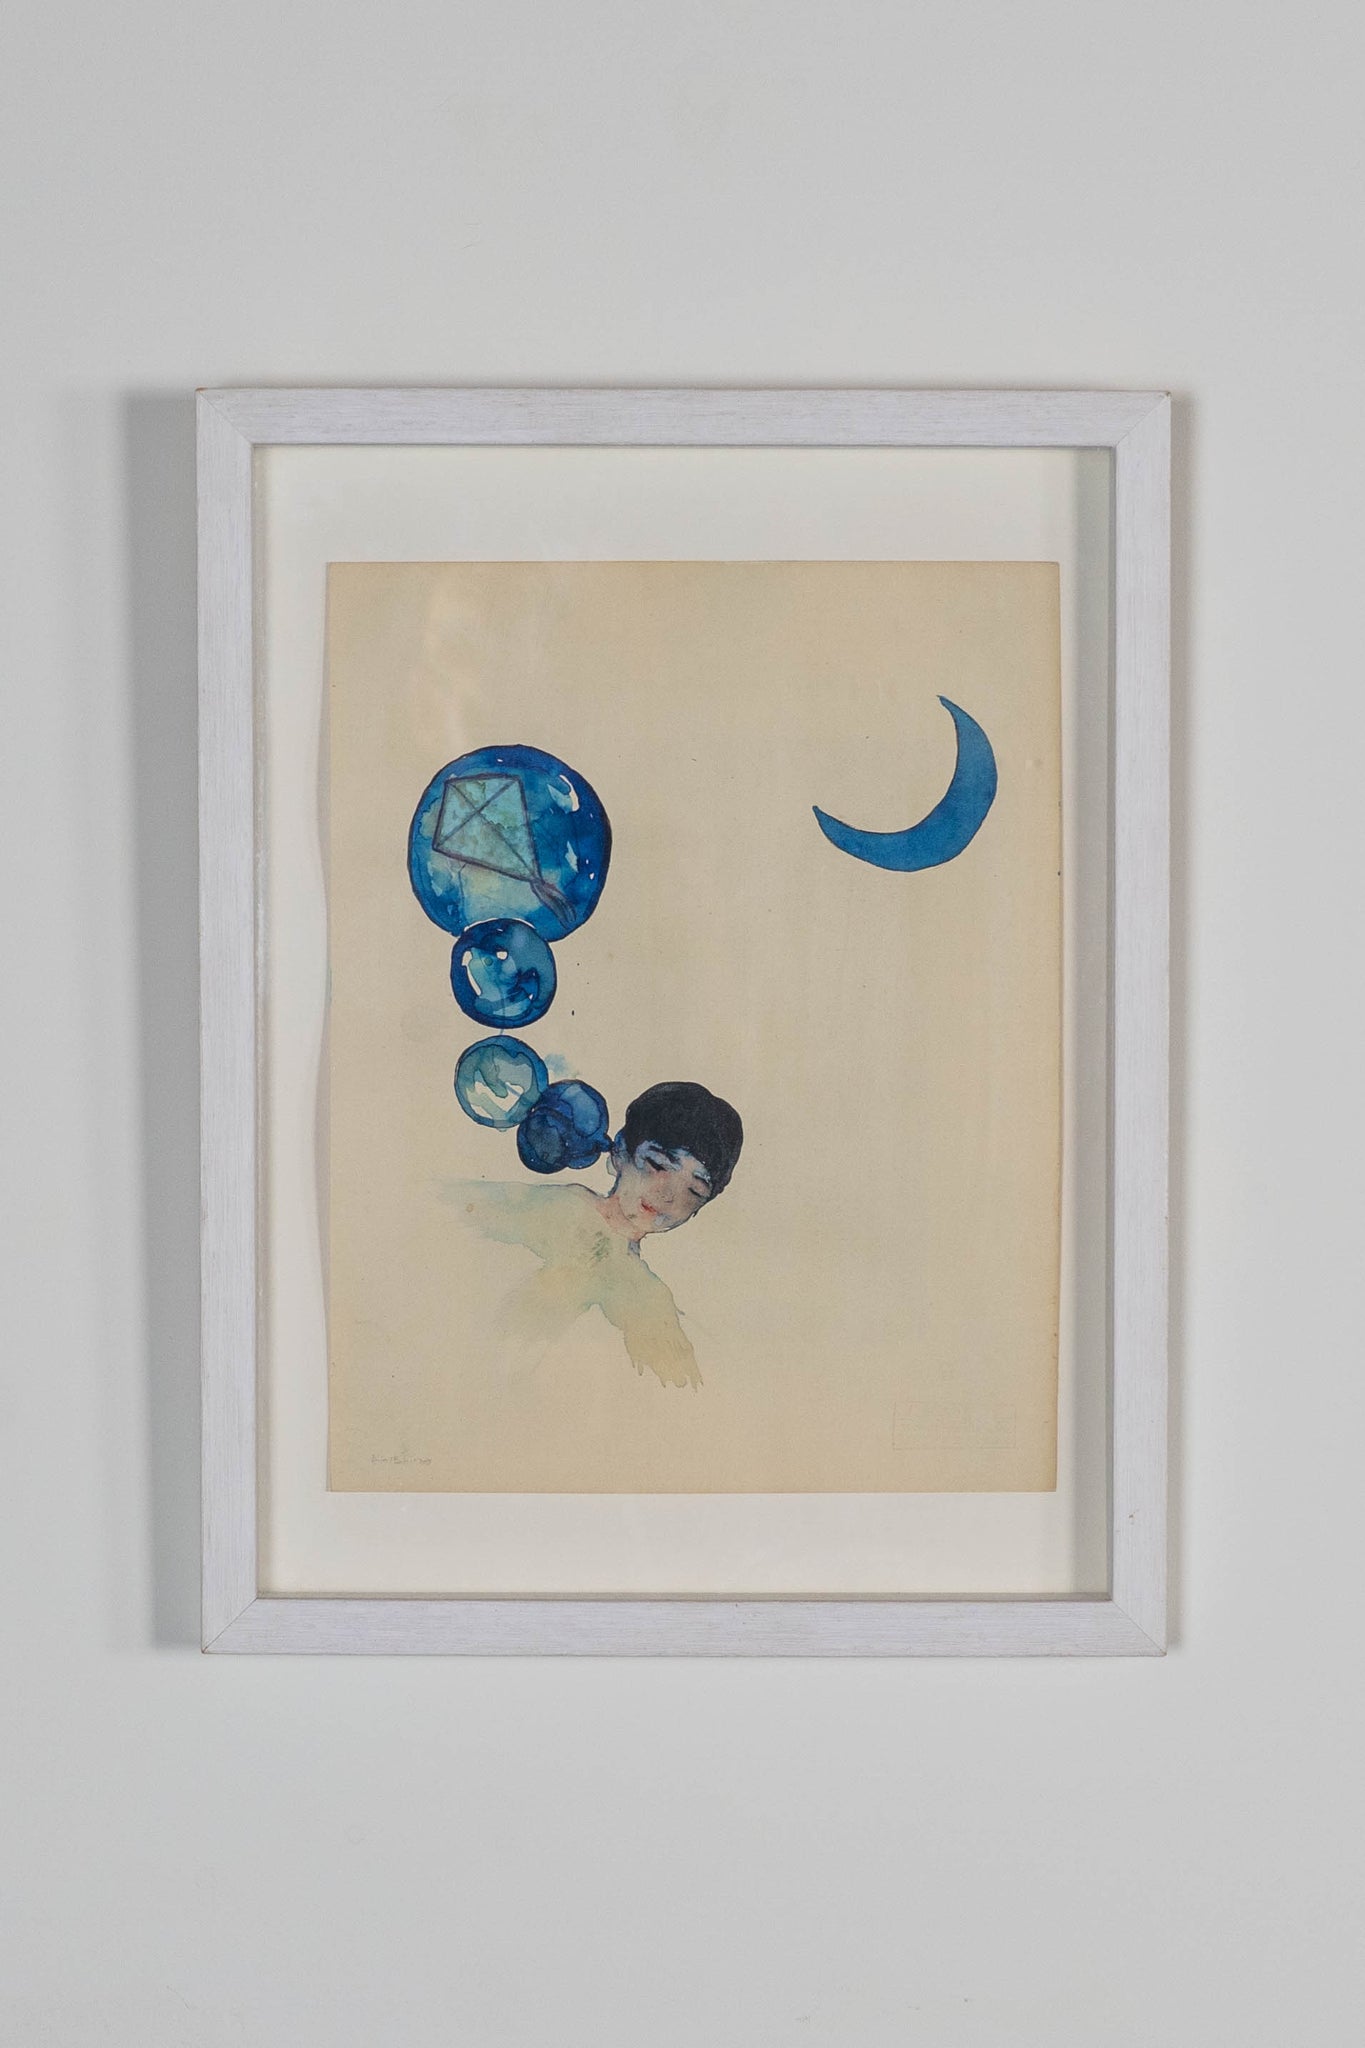 Bilal in the blue moon, Bilal Bahir, technique mixte, 2019